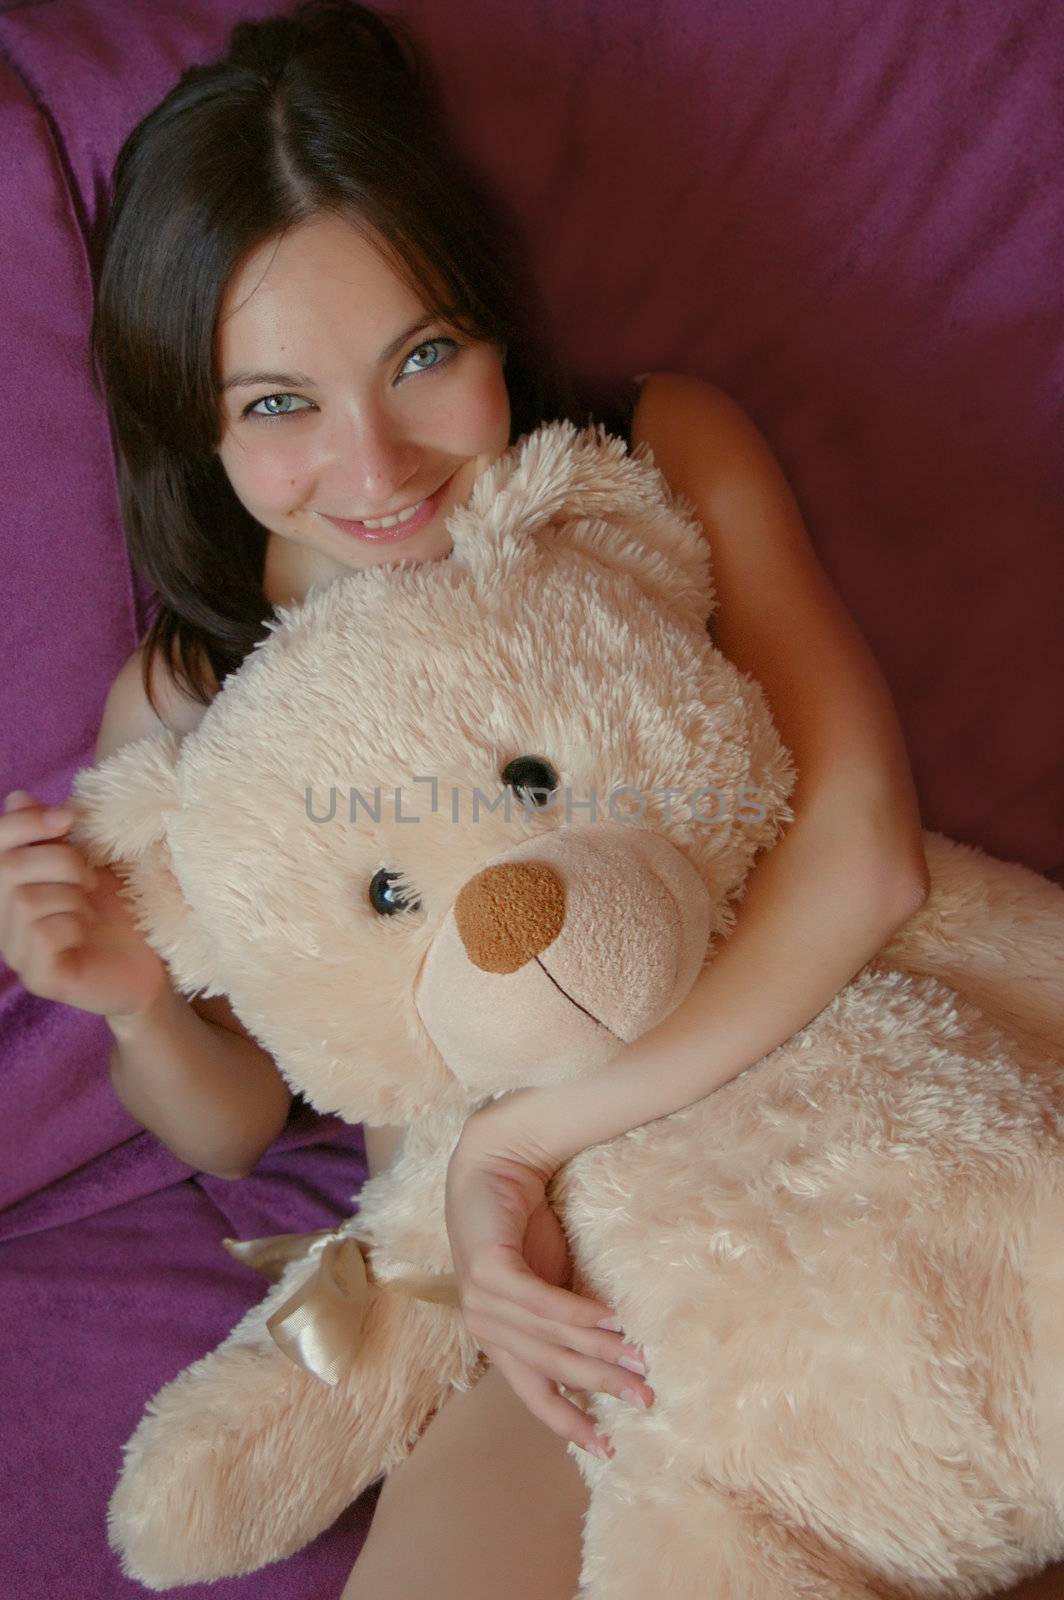 Beautiful girl with teddy bear